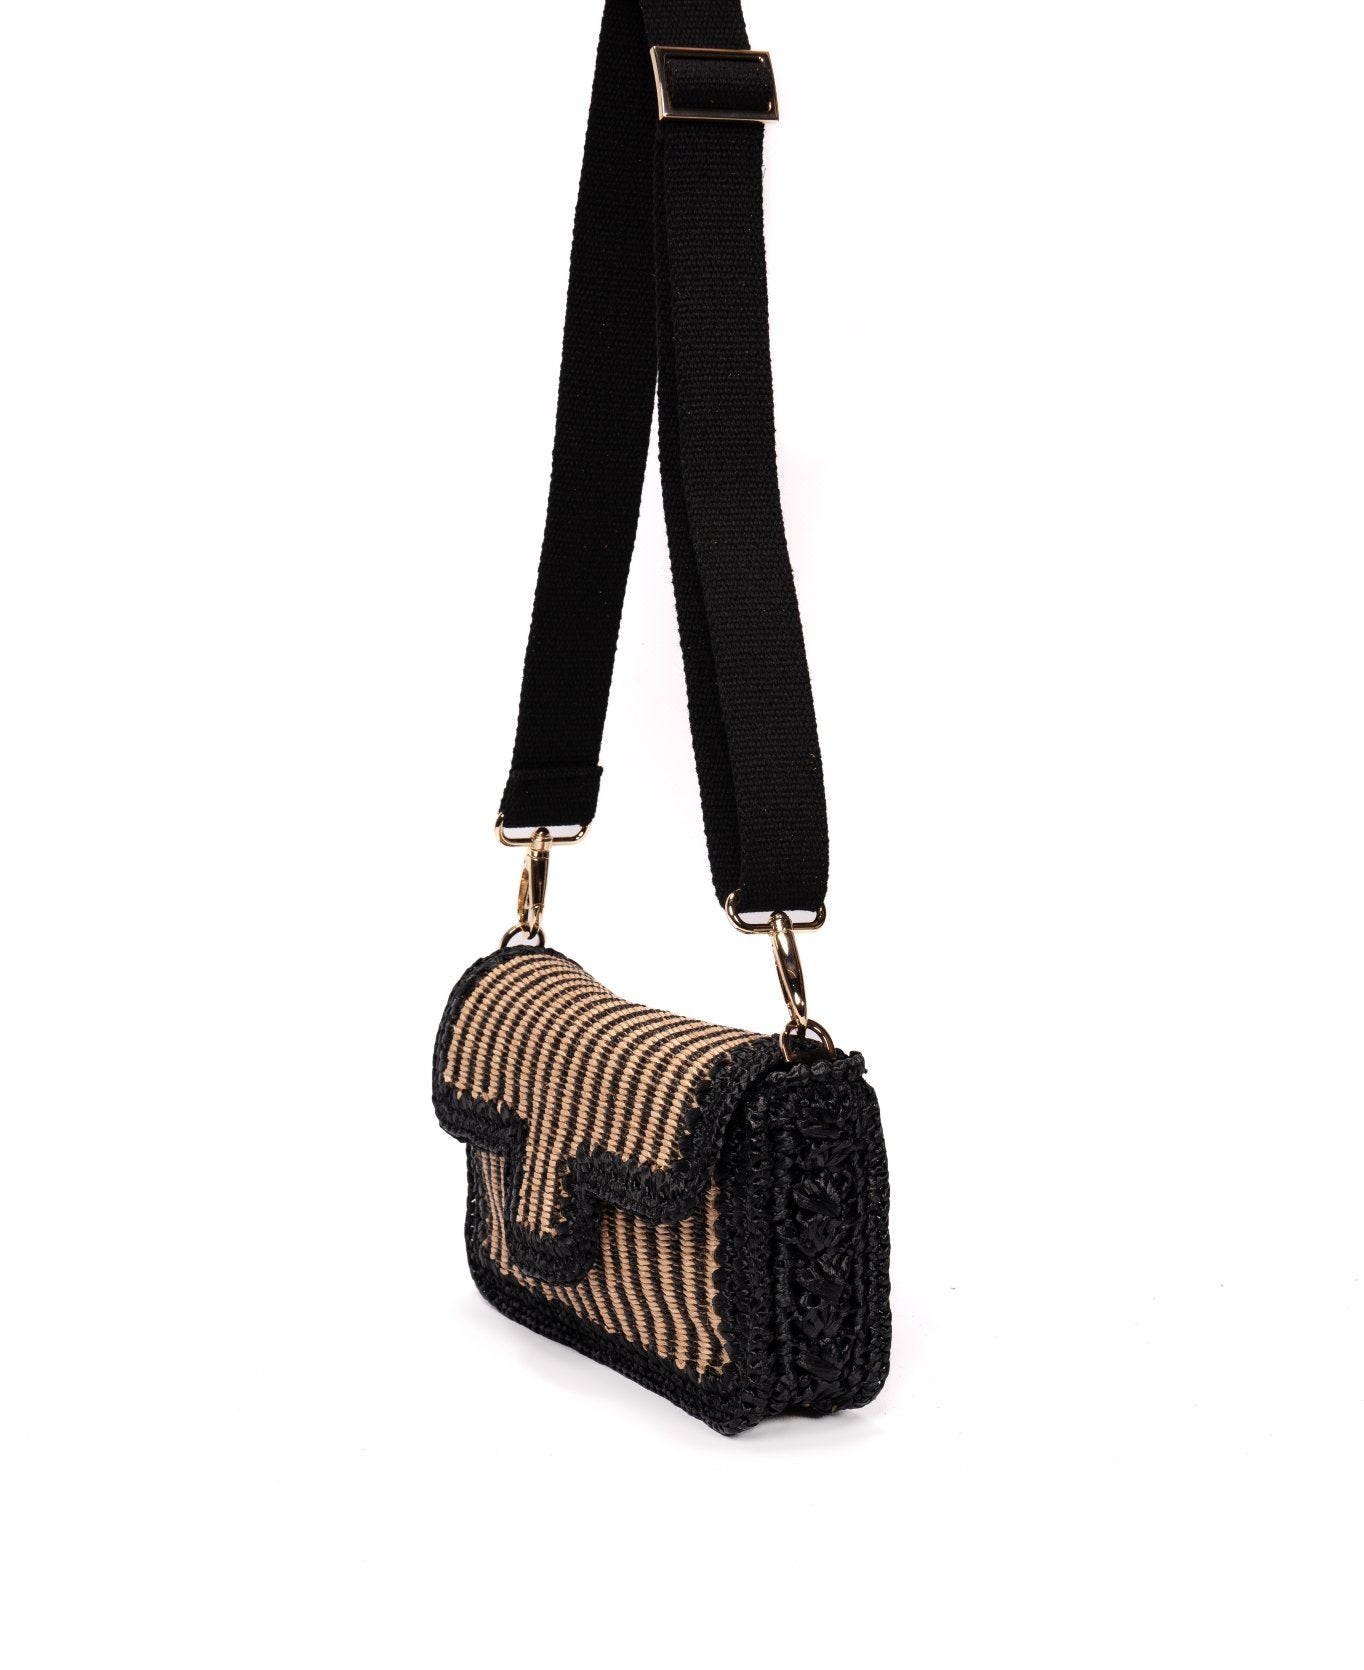 black and natural raffia bag, Ginevra clutch bag, handmade raffia bag, crochet stripe bag, Florence fashion accessory